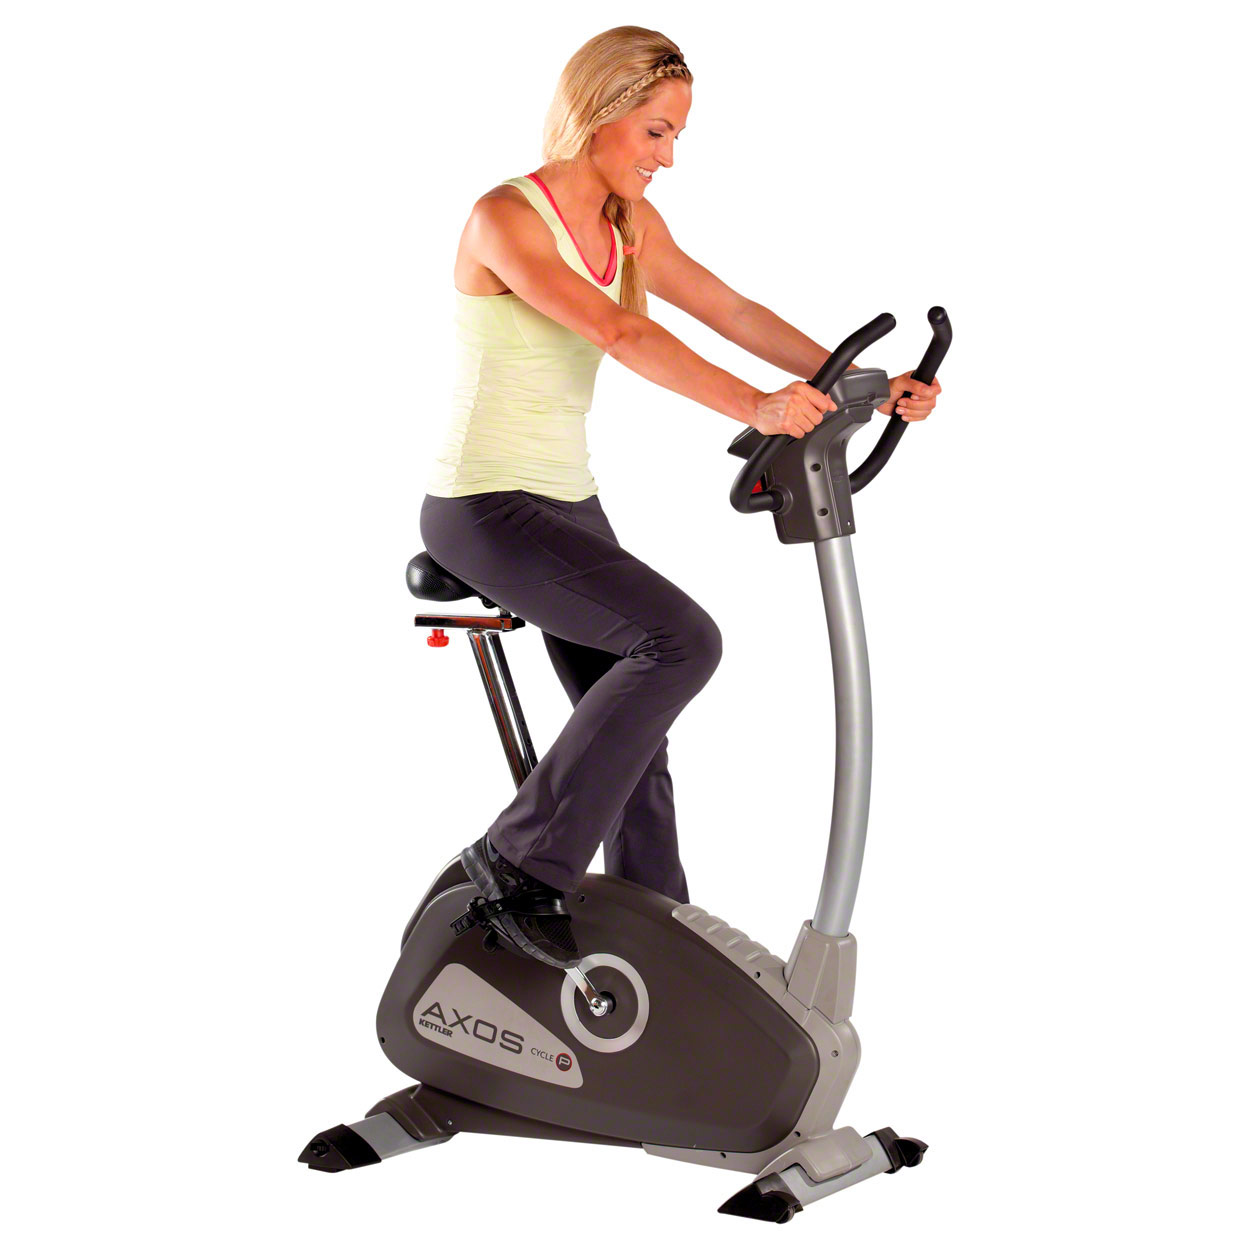 KETTLER exercise bike Axos Cycle P buy online | Sport-Tec